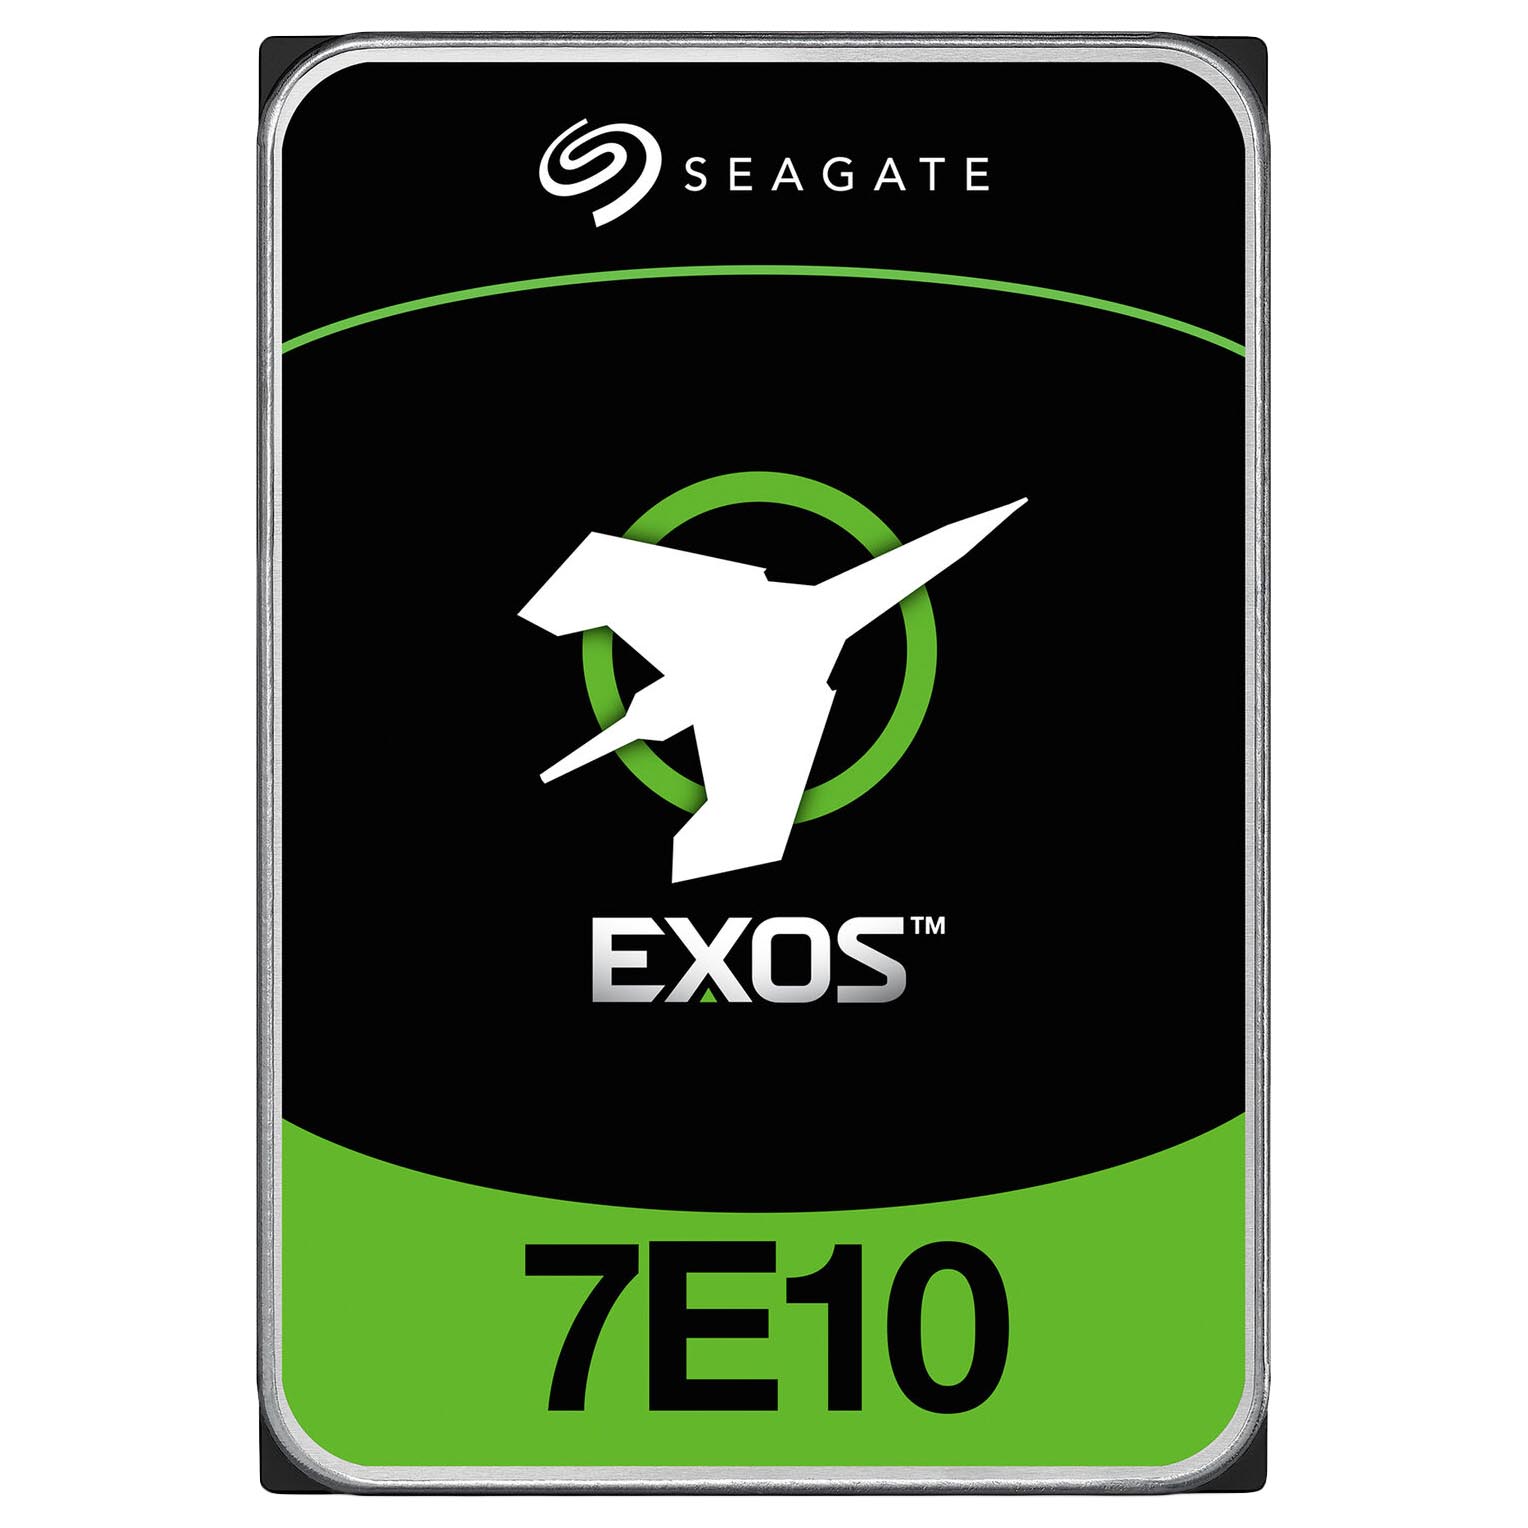 Внутренний жесткий диск Seagate Exos 7E10, ST8000NM018B, 8 Тб жесткий диск seagate exos 7e10 10 тб st10000nm018b